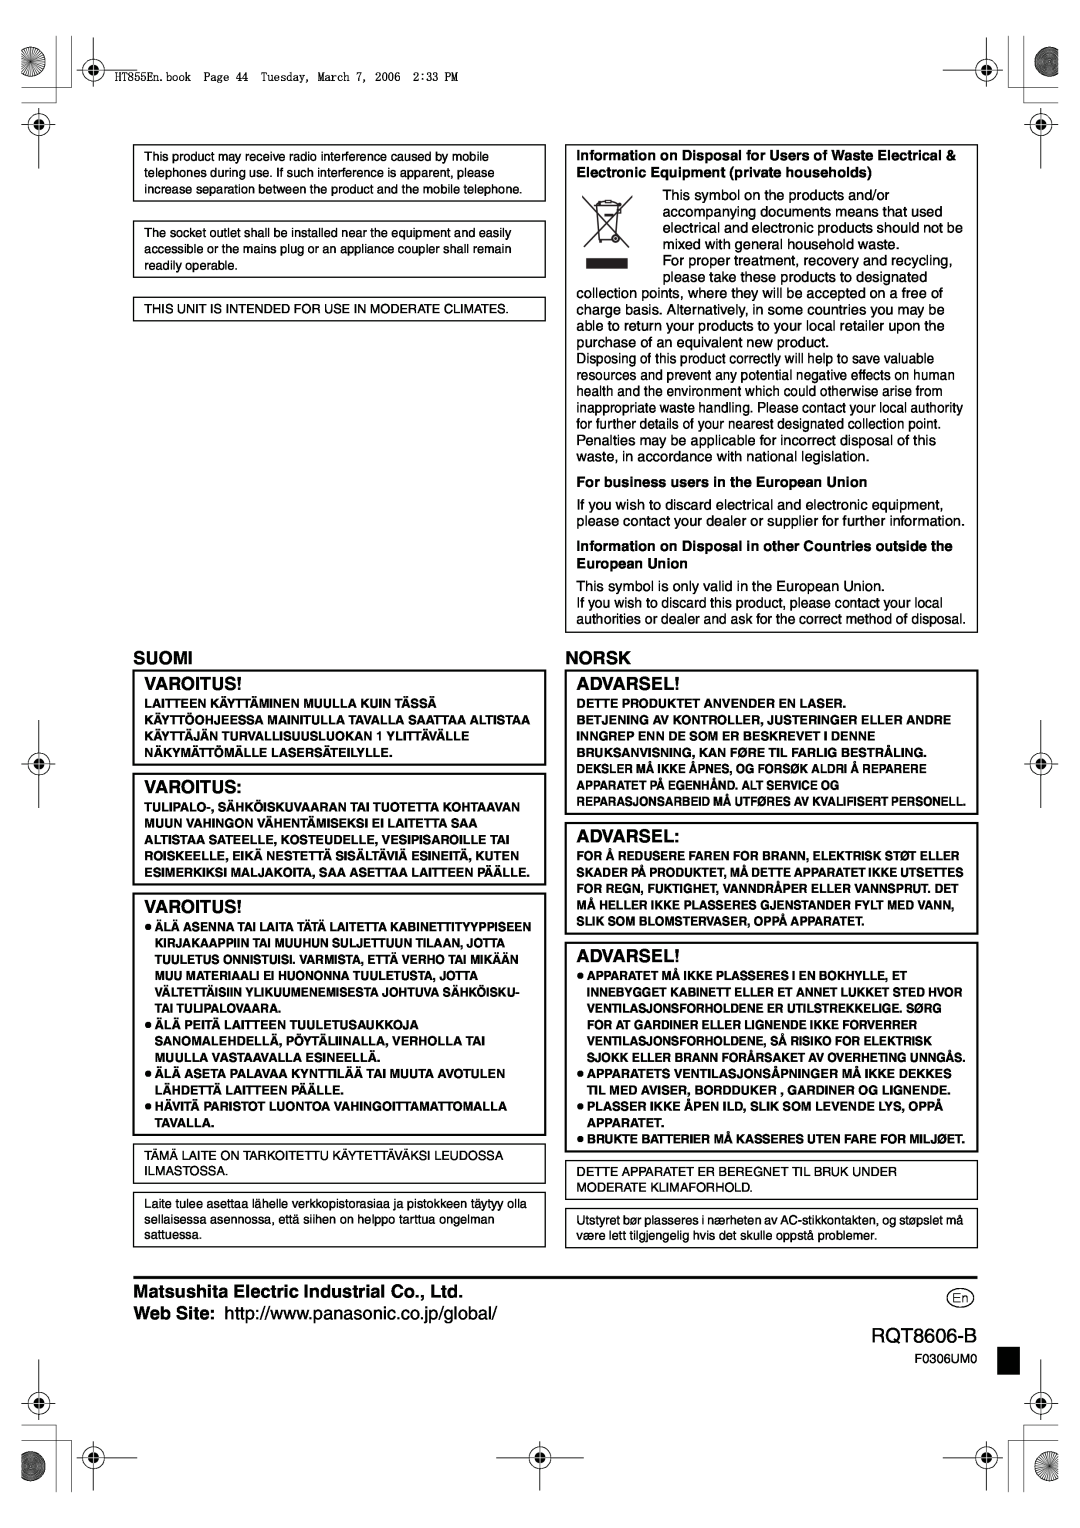 Panasonic SC-HT855 manual Suomi Varoitus, Norsk Advarsel, Matsushita Electric Industrial Co., Ltd, RQT8606-B 